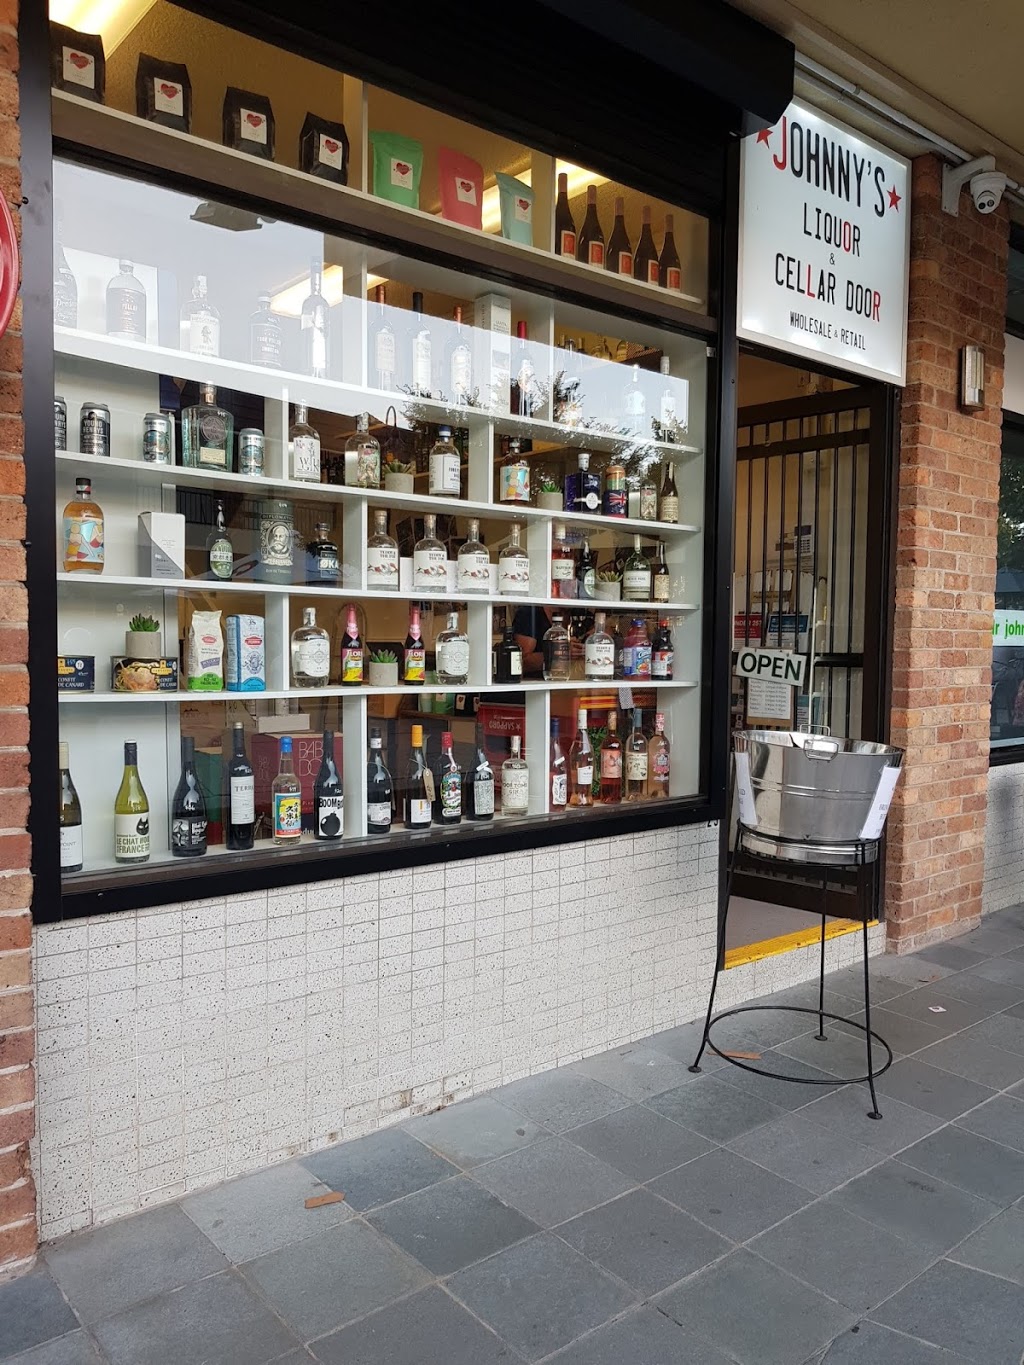 Johnnys Liquor and Cellar Door | store | 332-346 Military Rd, Cremorne NSW 2090, Australia